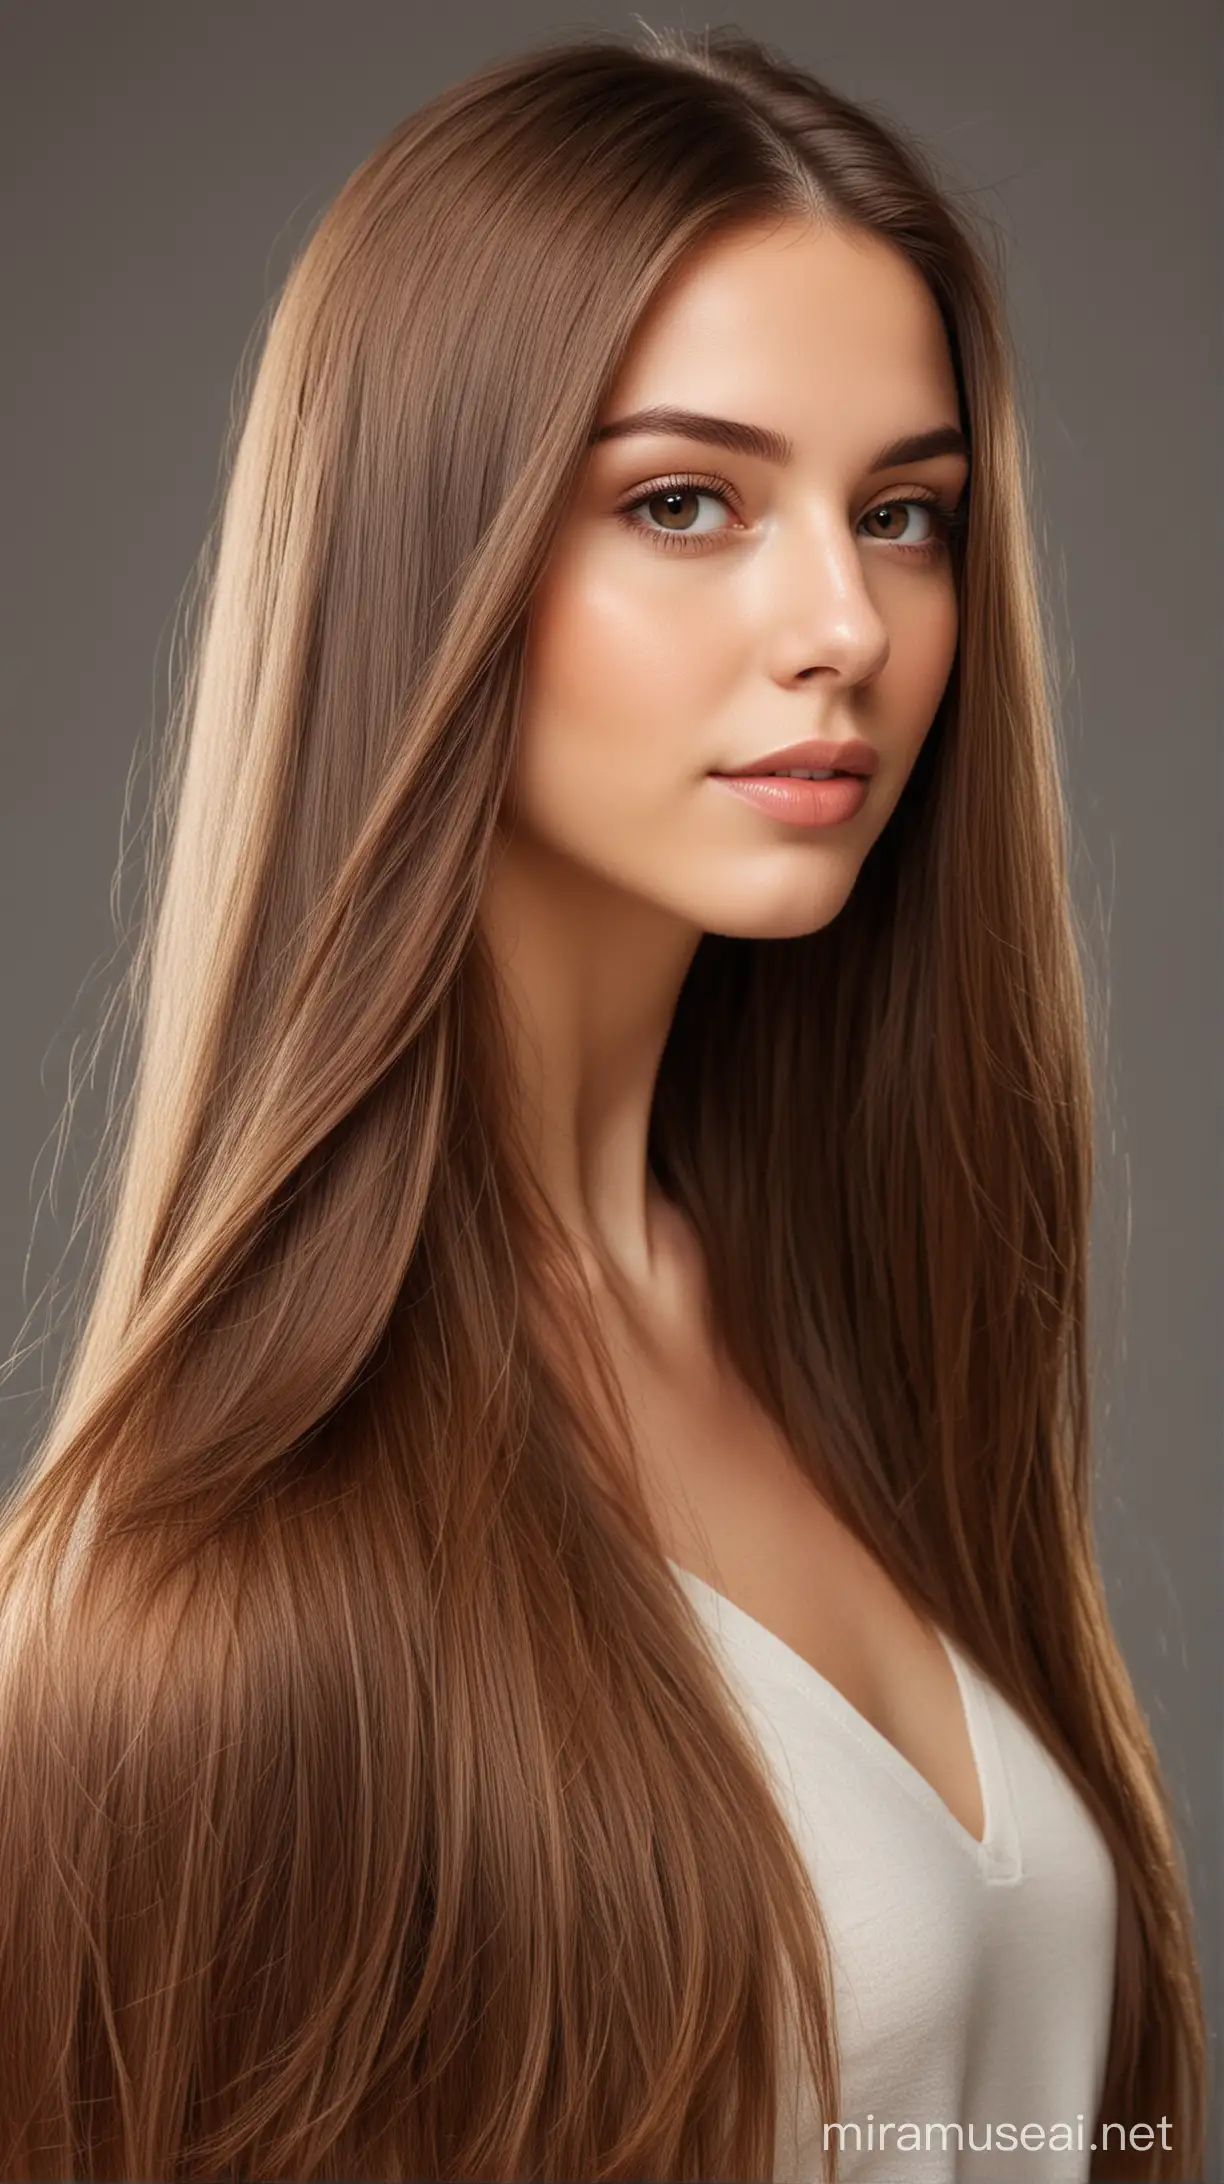 Elegant Woman with Long Brown Hair in Full Body Portrait